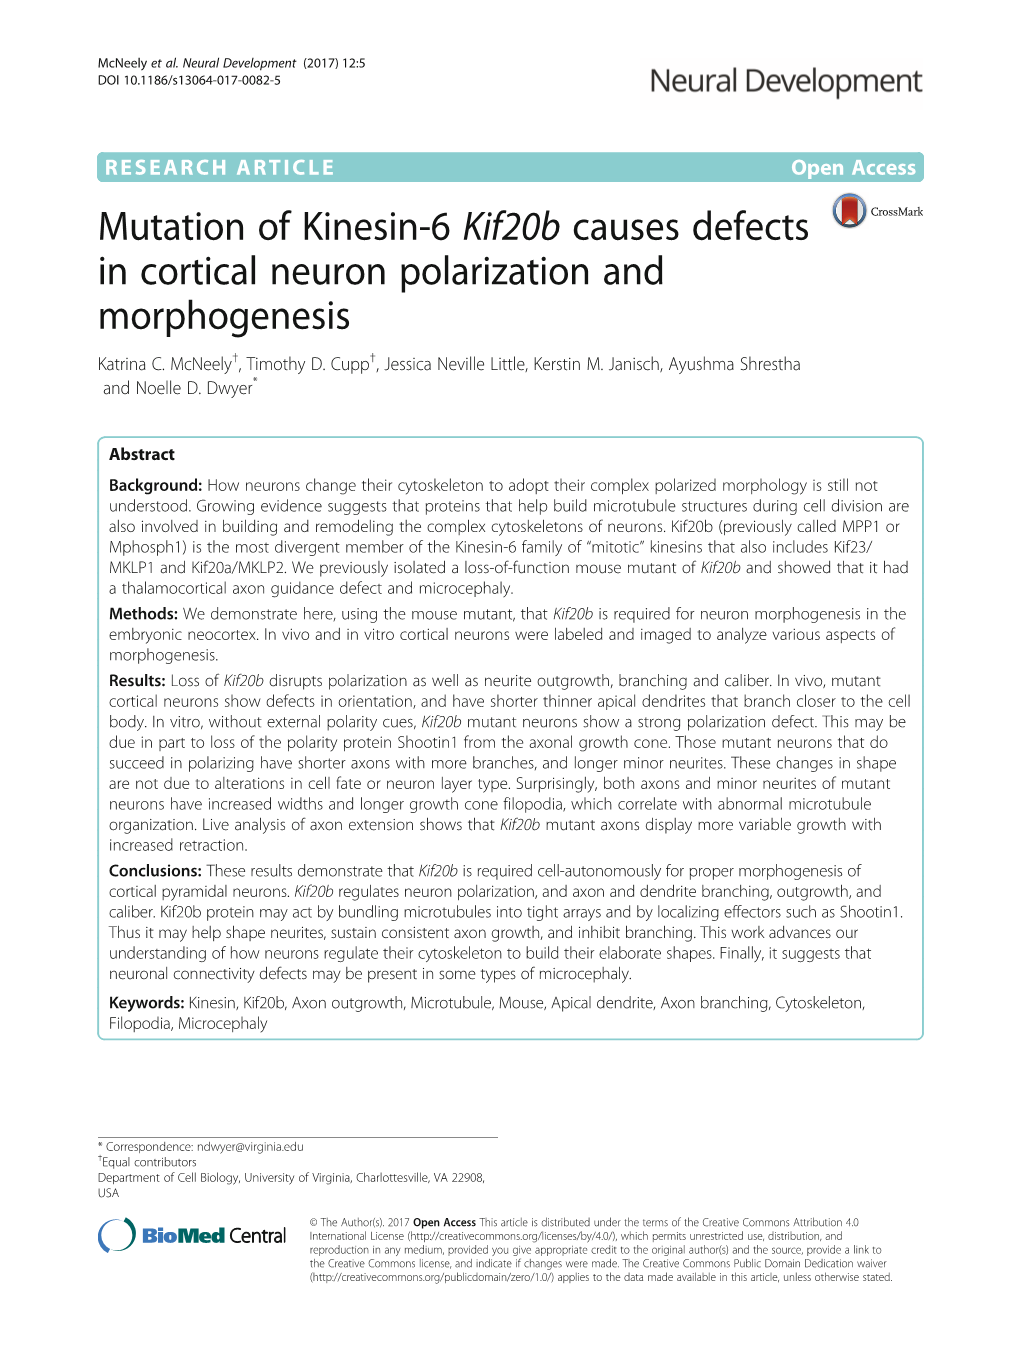 Mutation of Kinesin-6 Kif20b Causes Defects in Cortical Neuron Polarization and Morphogenesis Katrina C